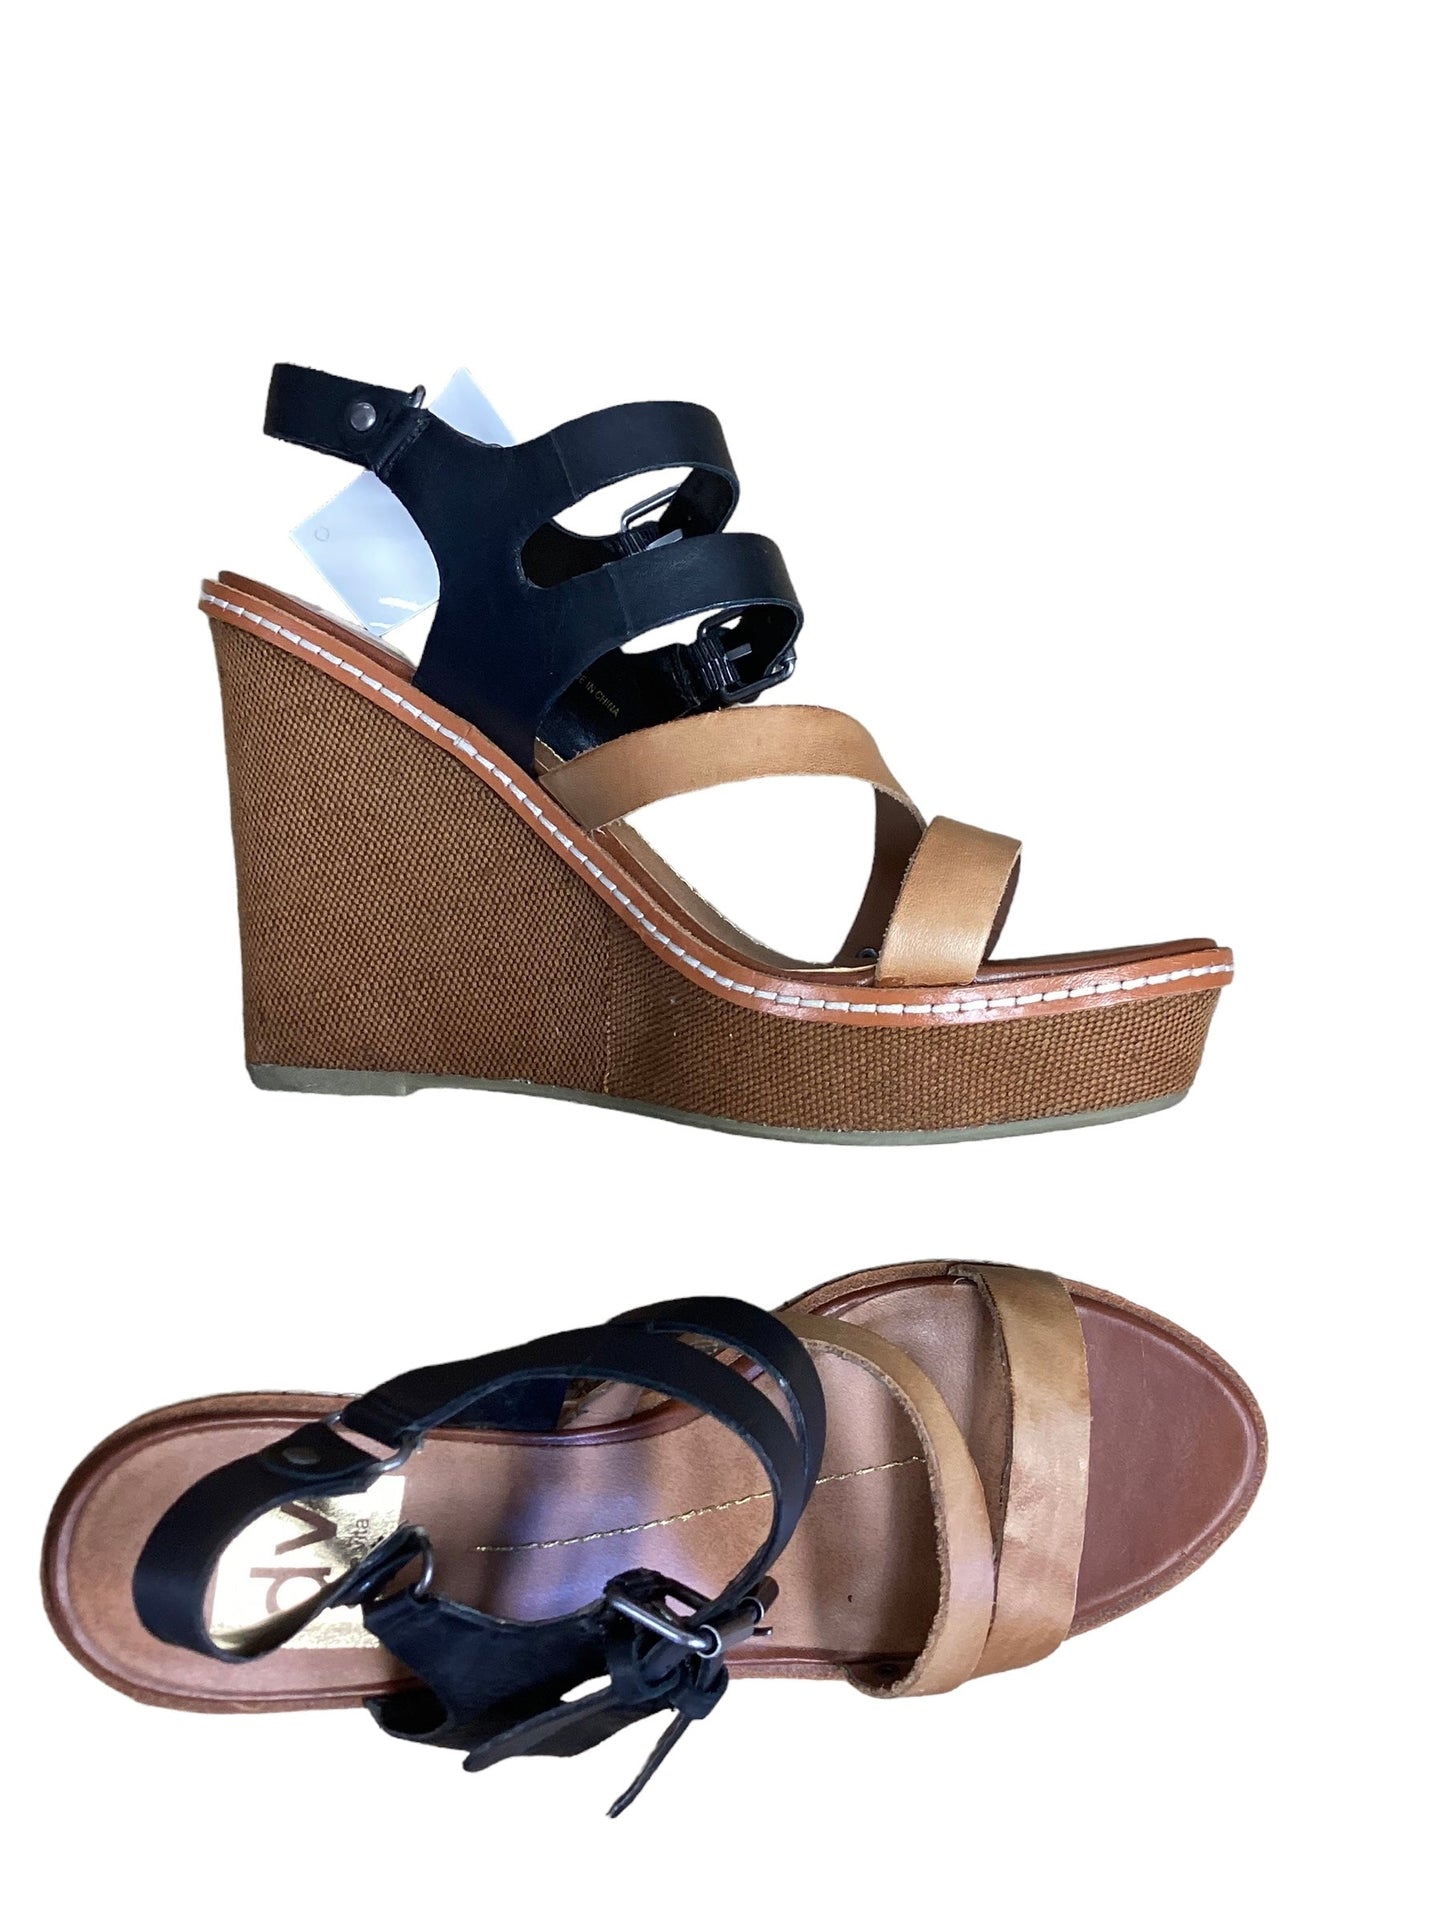 Black & Brown Sandals Heels Wedge Dolce Vita, Size 8.5